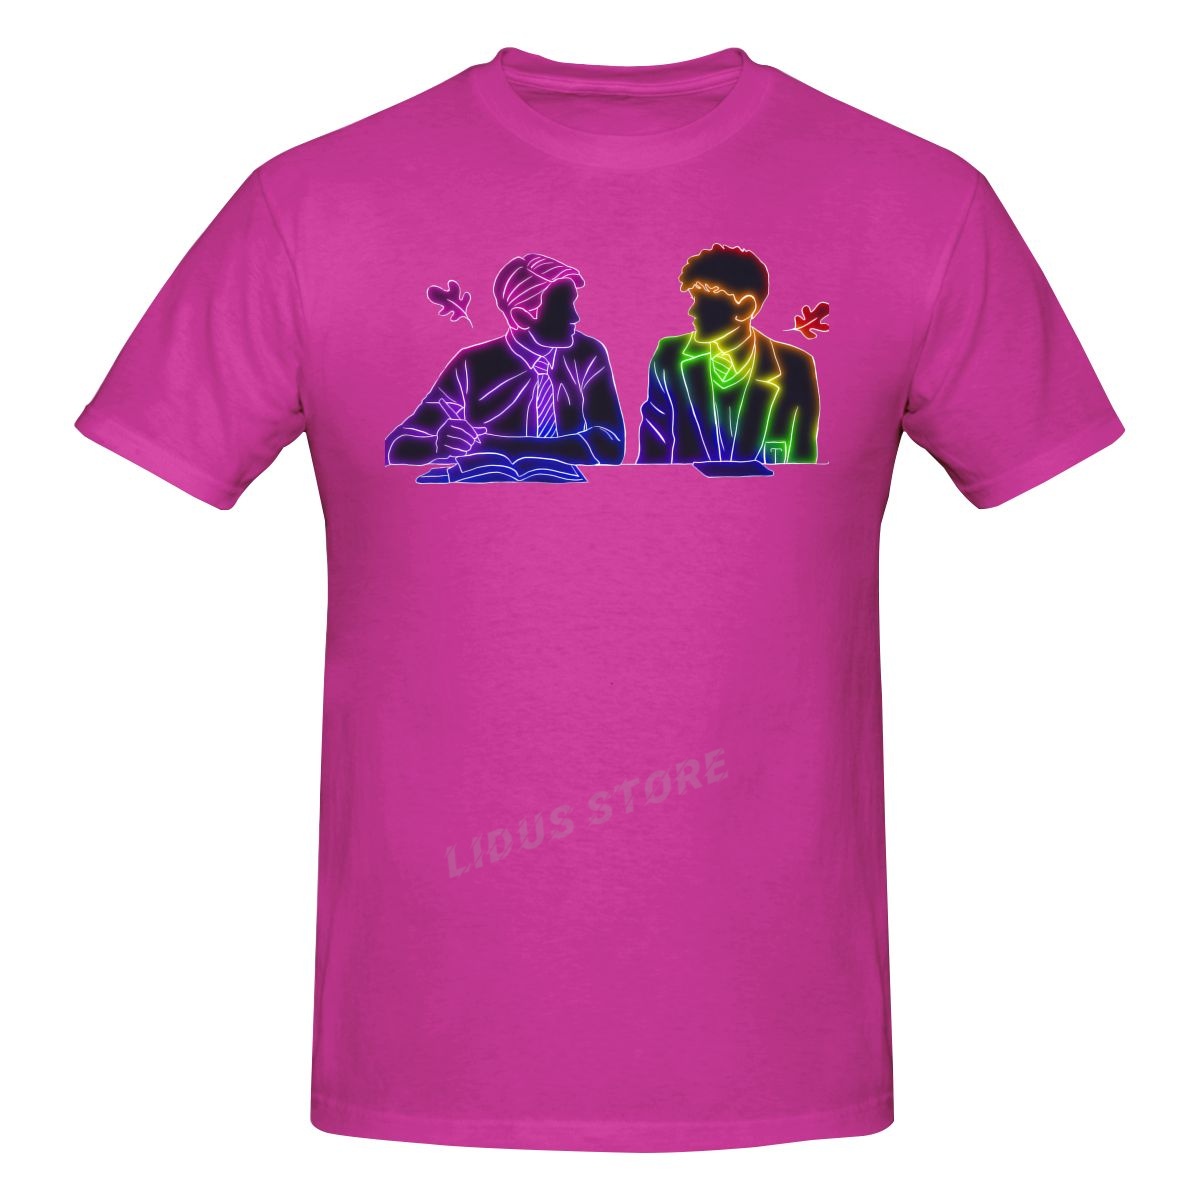 Heartstopper Rainbow T Shirt Clothing Graphics Tshirt Short Sleeve Sweatshirt undershirt Unisex Shirt Tee